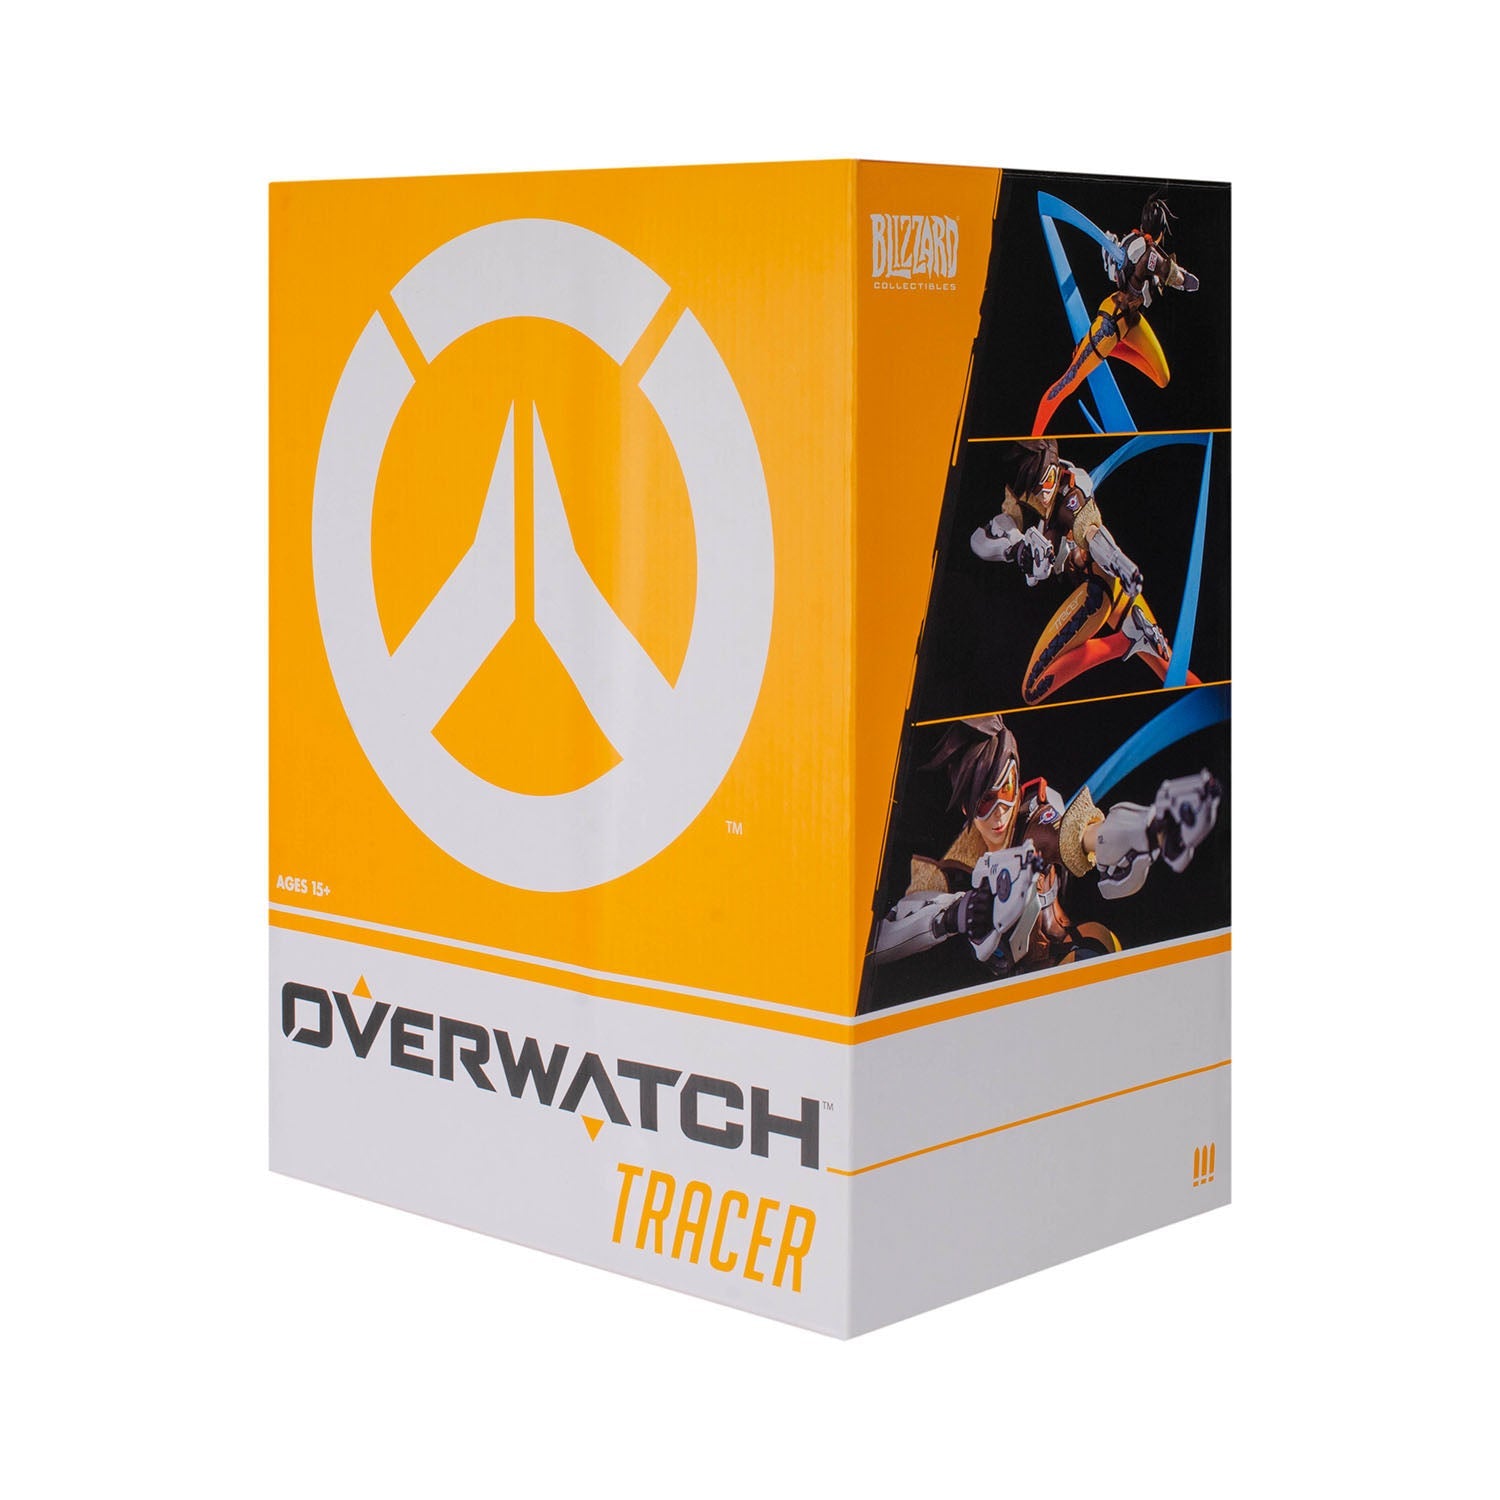 Overwatch Tracer 27cm Premium Statue in Orange - Front Box View